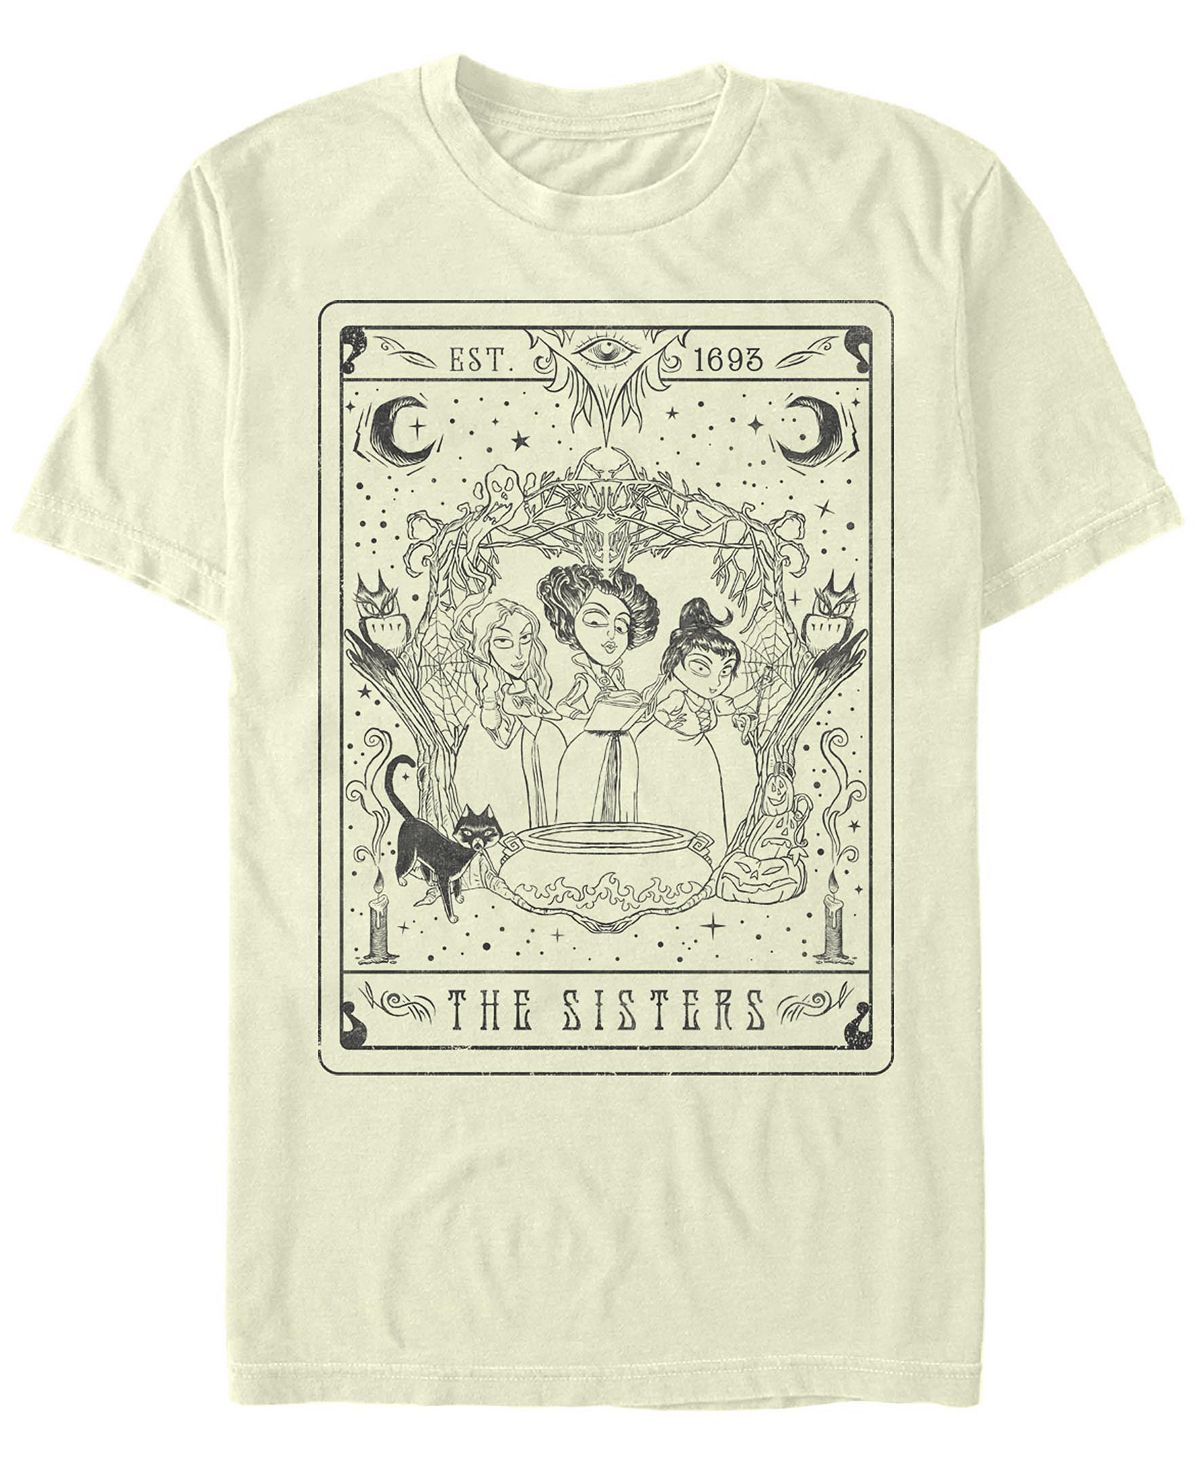 Мужская футболка с коротким рукавом hocus pocus the sisters tarot Fifth Sun цена и фото